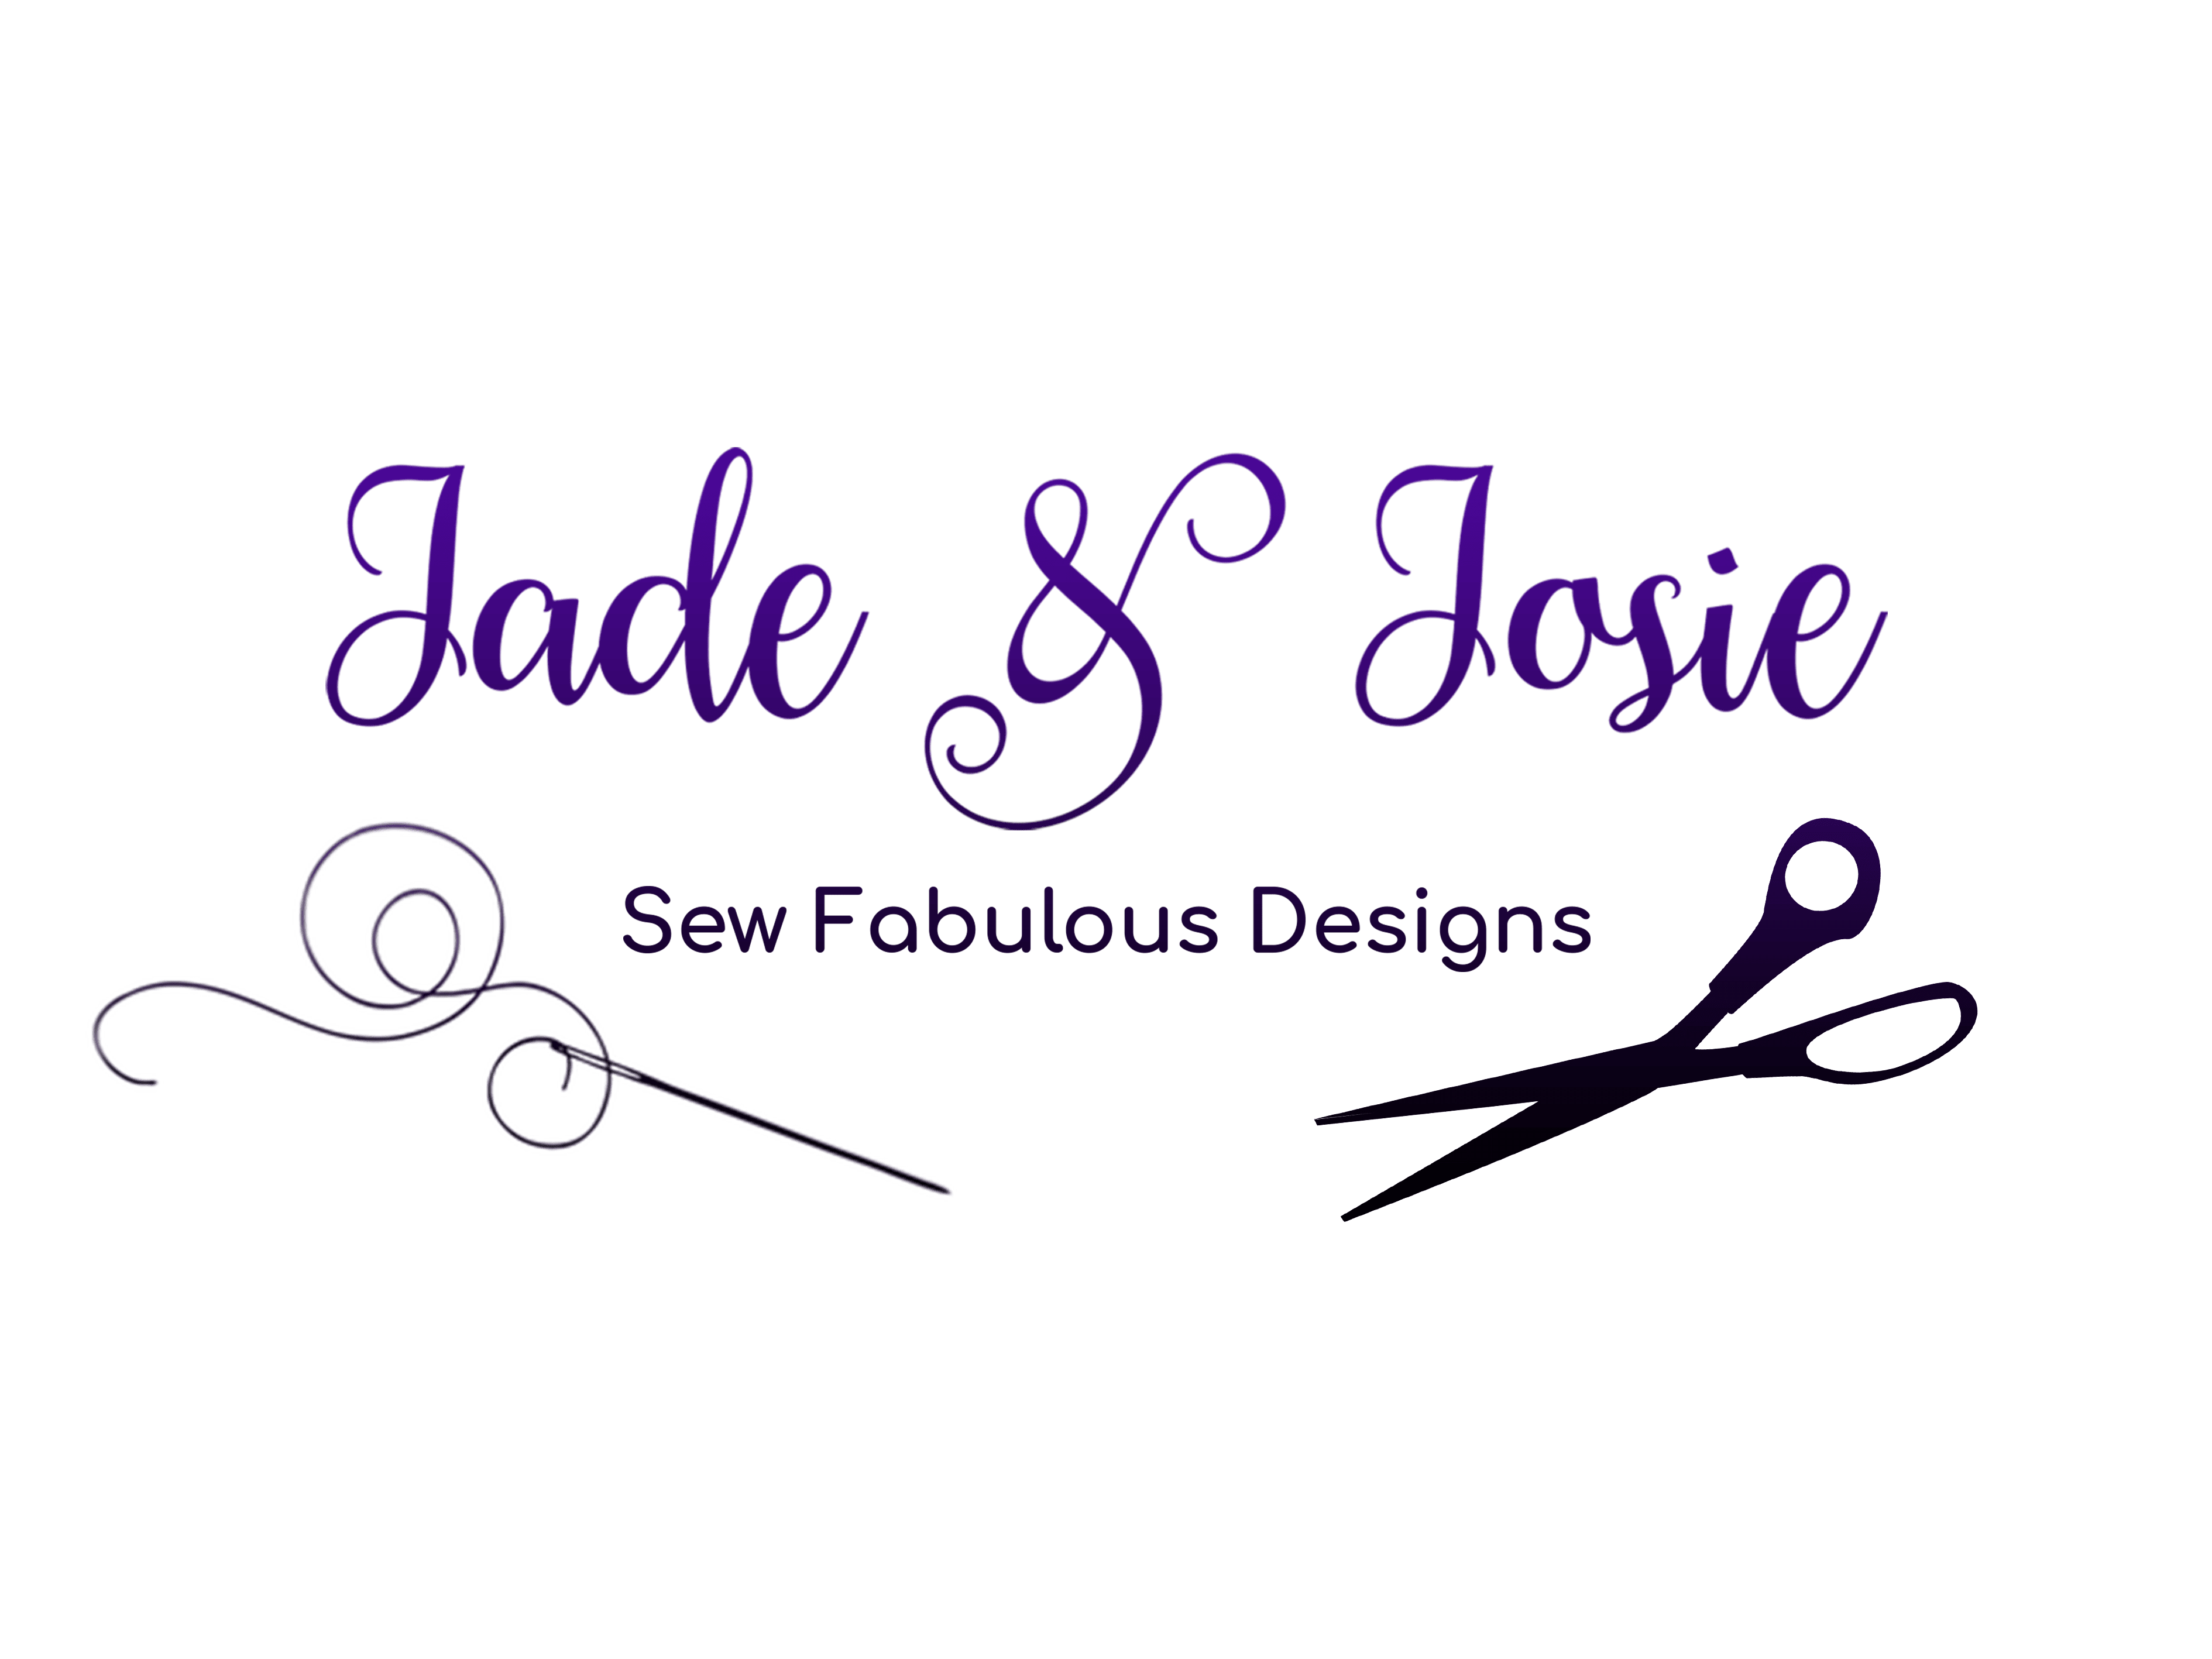 Jade & Josie